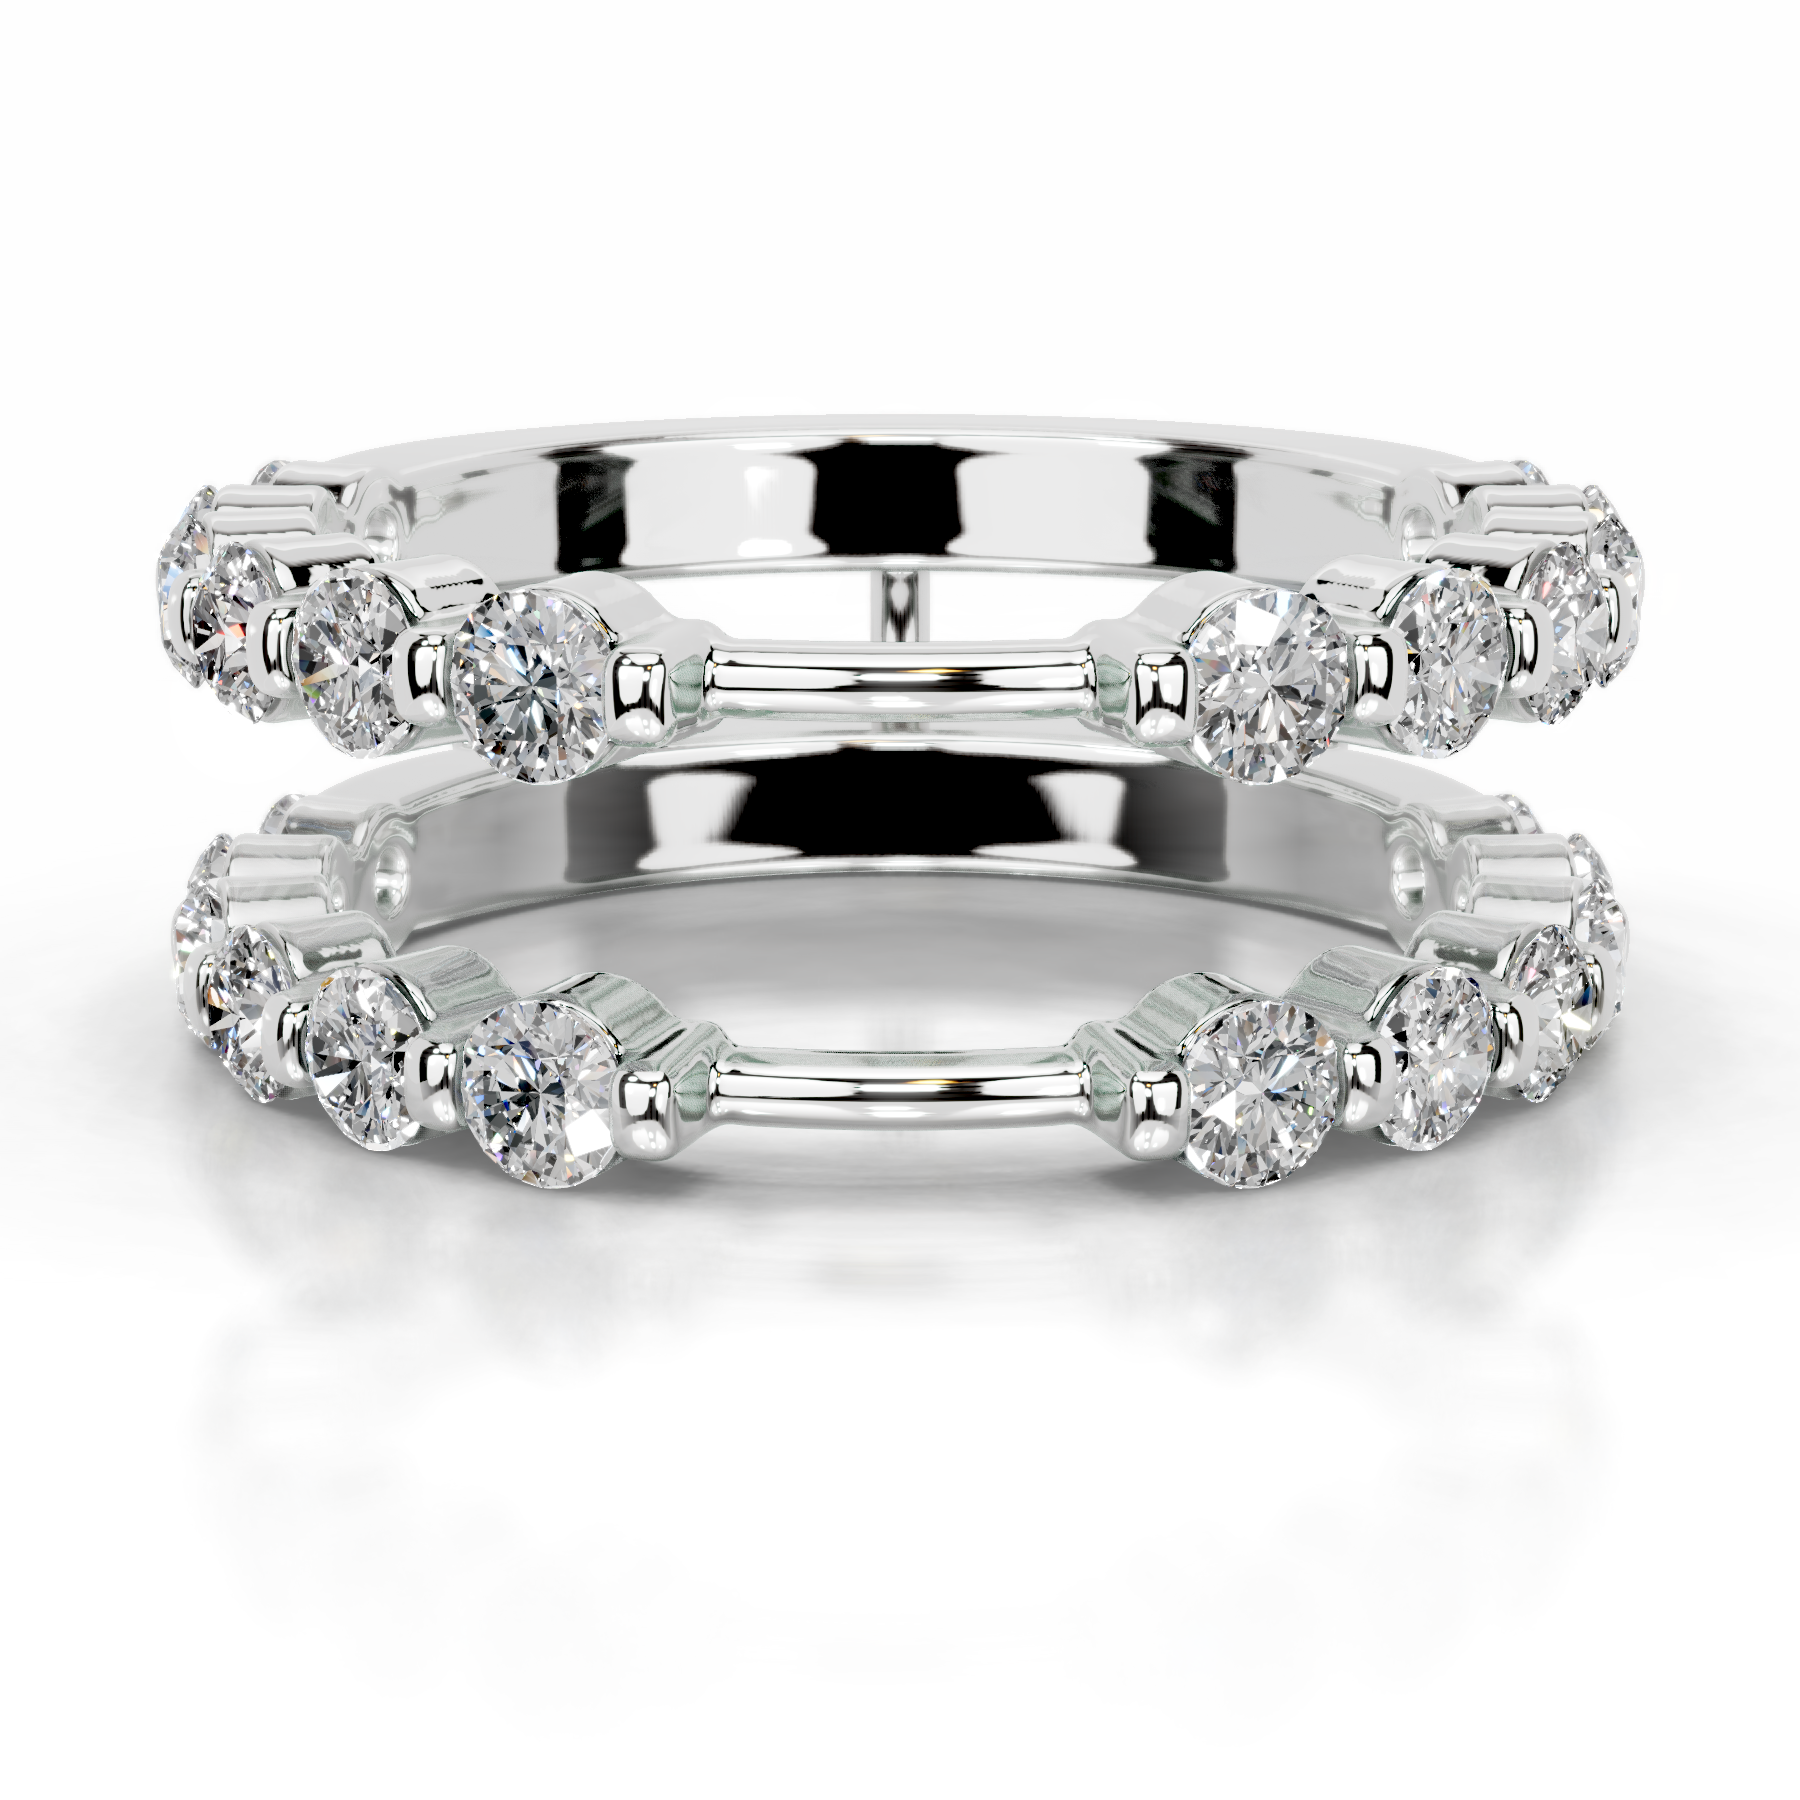 Ashley Diamond Wedding Ring   (1.25 Carat) -14K White Gold